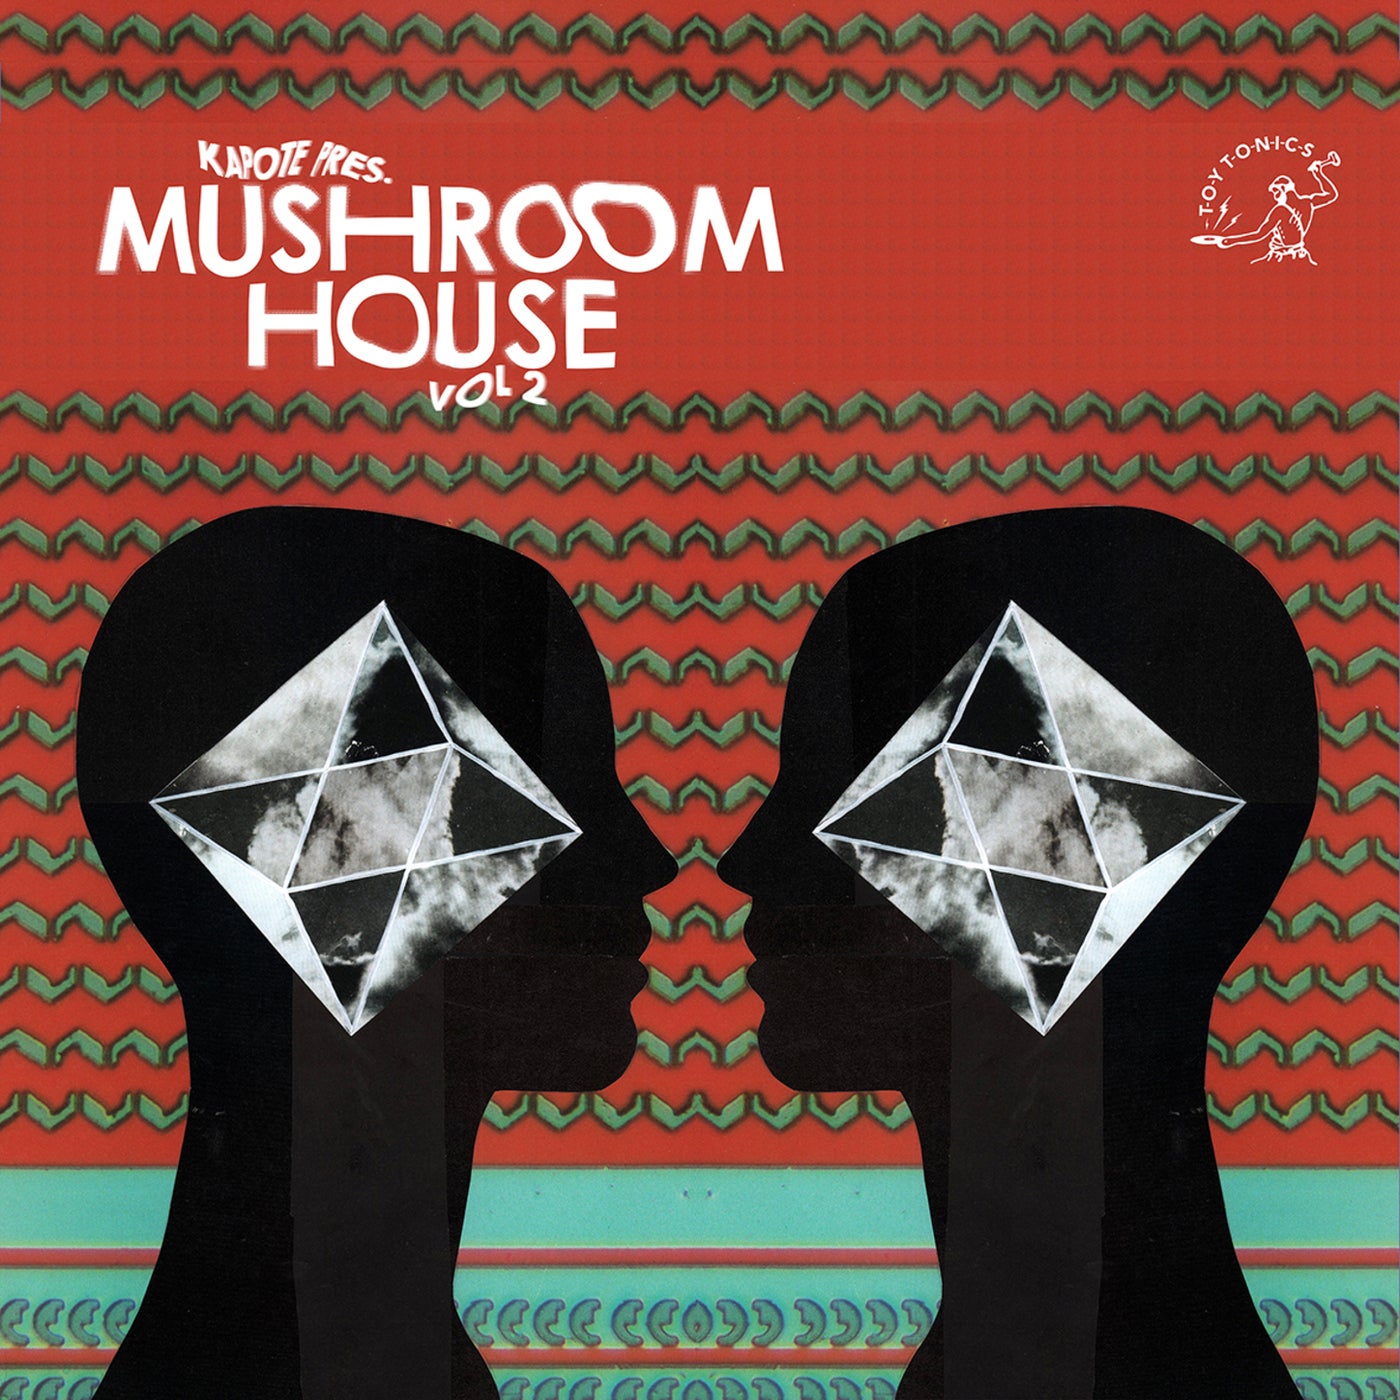 Download Kapote pres Mushroom House Vol. 2 on Electrobuzz